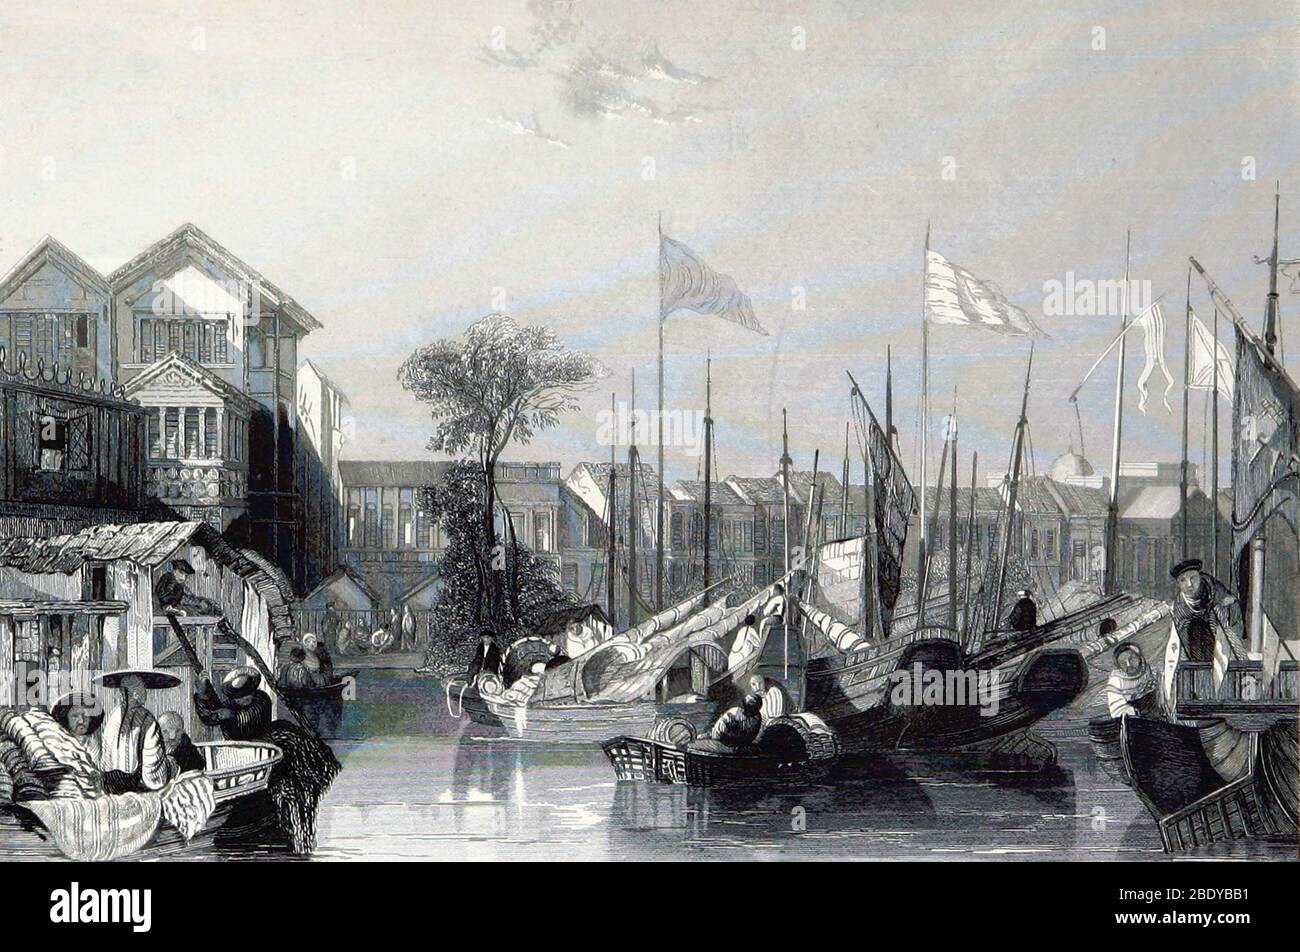 Almacenes europeos, China, siglo XIX Foto de stock